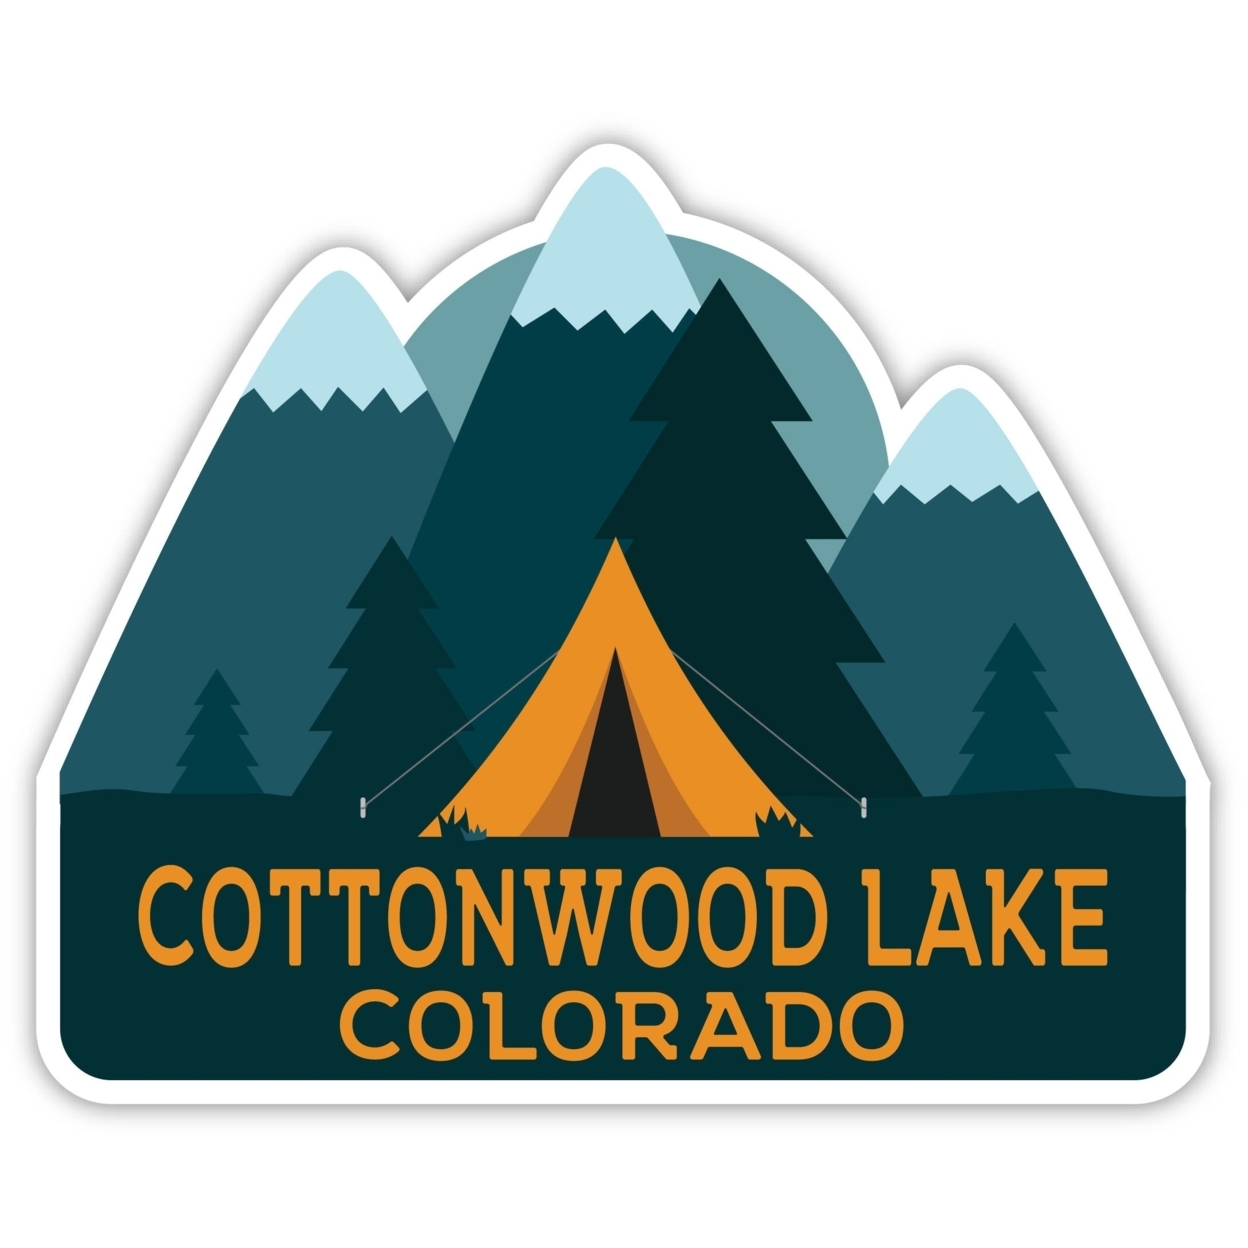 Cottonwood Lake Colorado Souvenir Decorative Stickers (Choose Theme And Size) - Single Unit, 8-Inch, Tent